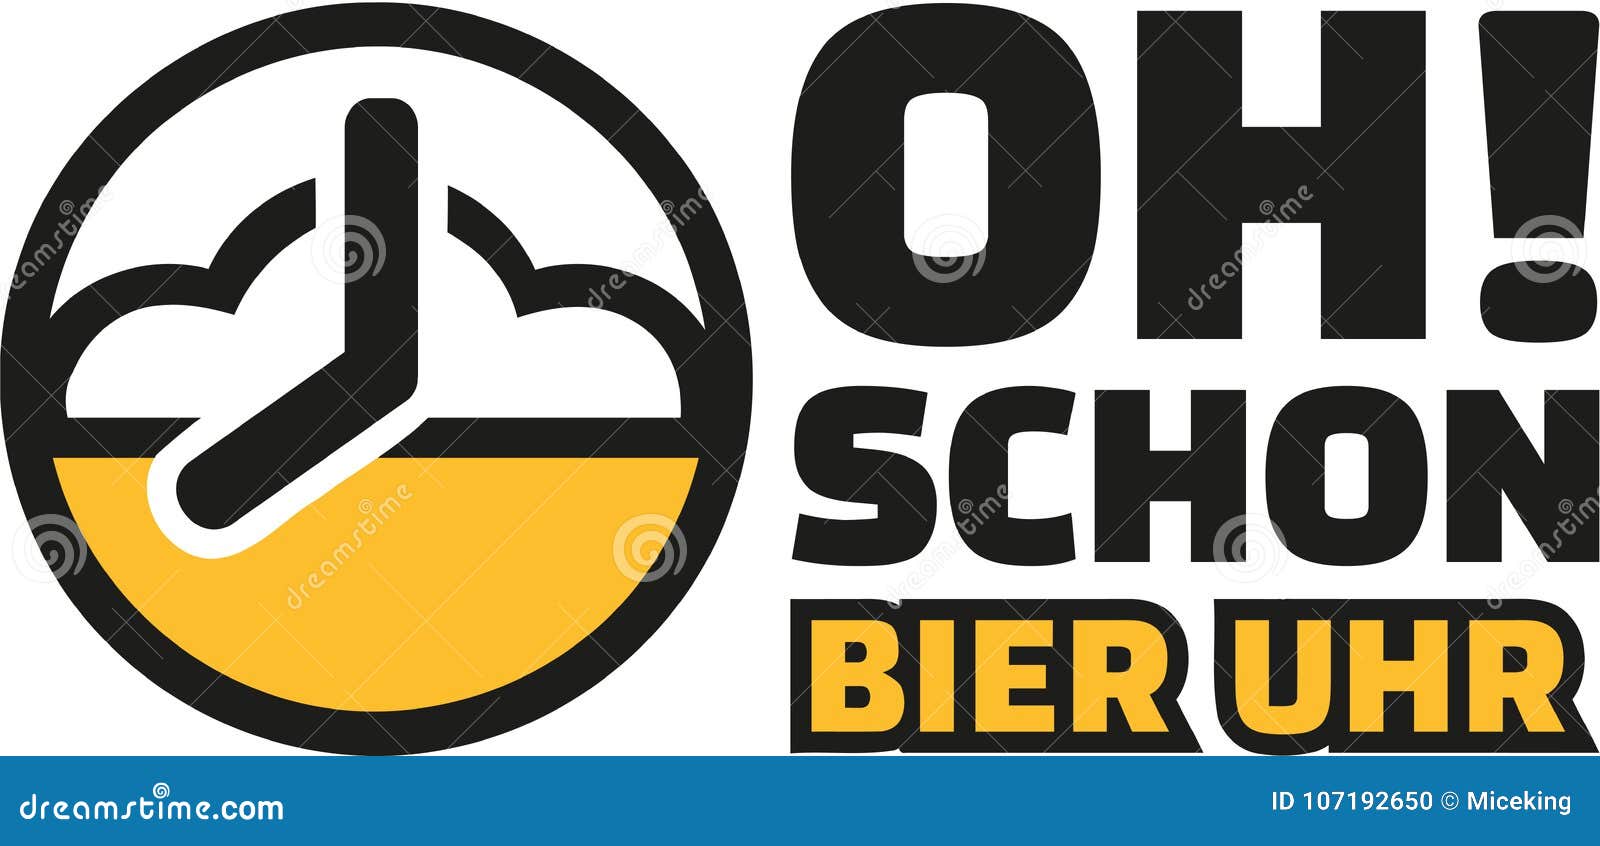 oh, already beer o`clock! german saying.